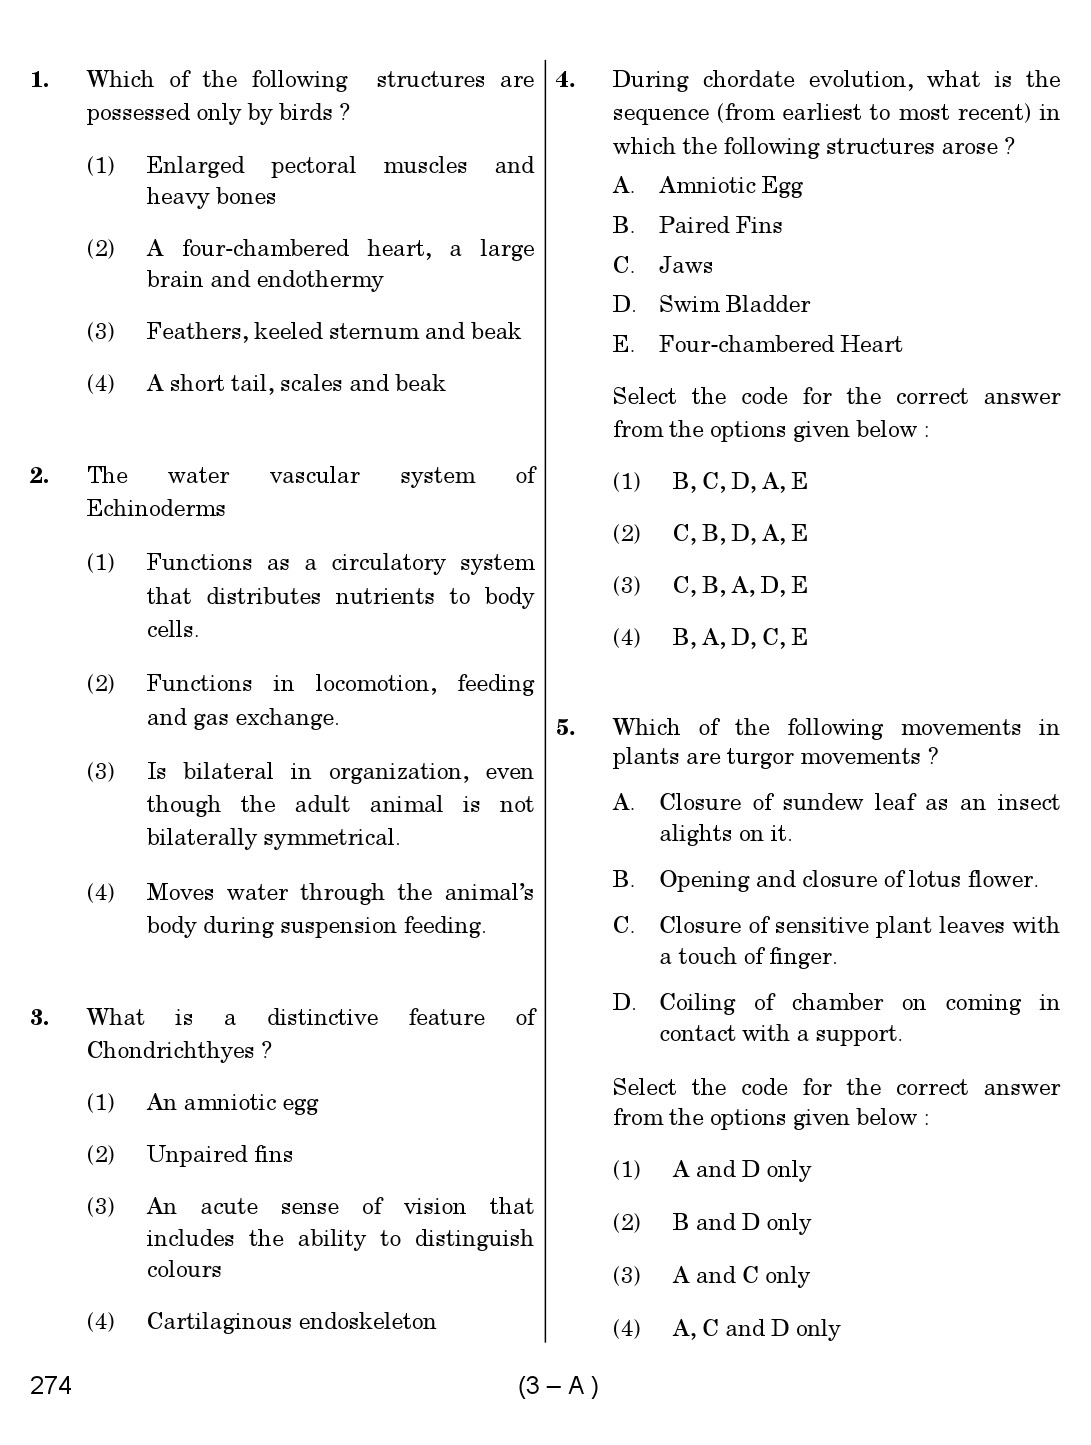 Karnataka PSC Science Teacher Exam Sample Question Paper Subject code 274 3